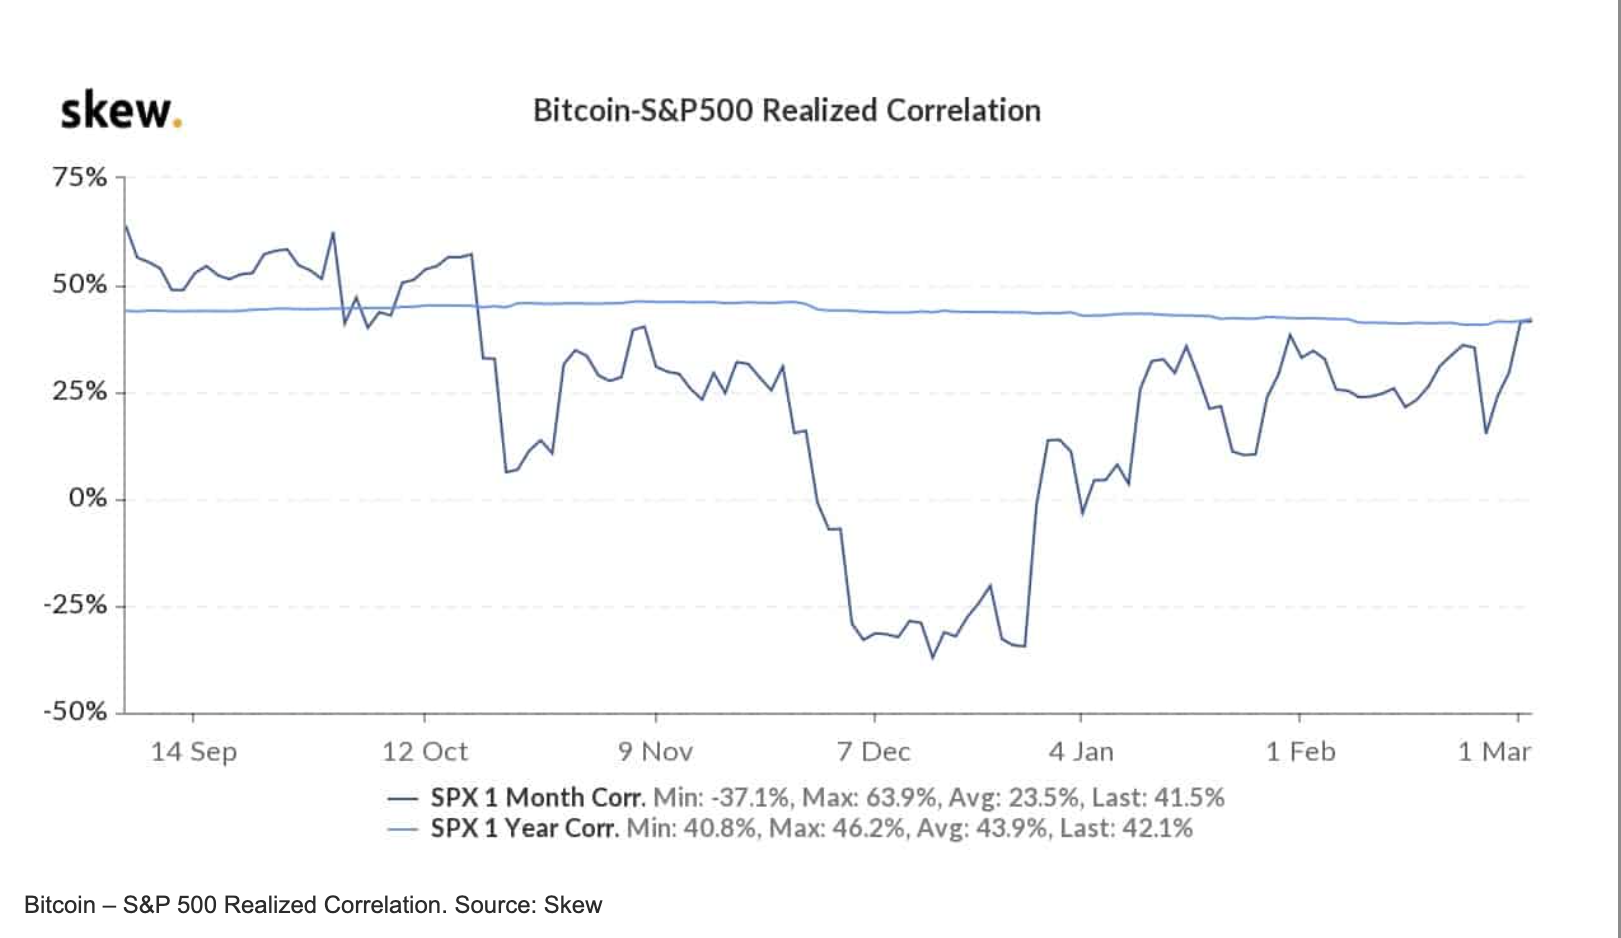 Bitcoin S$P 500 Realized Correlation